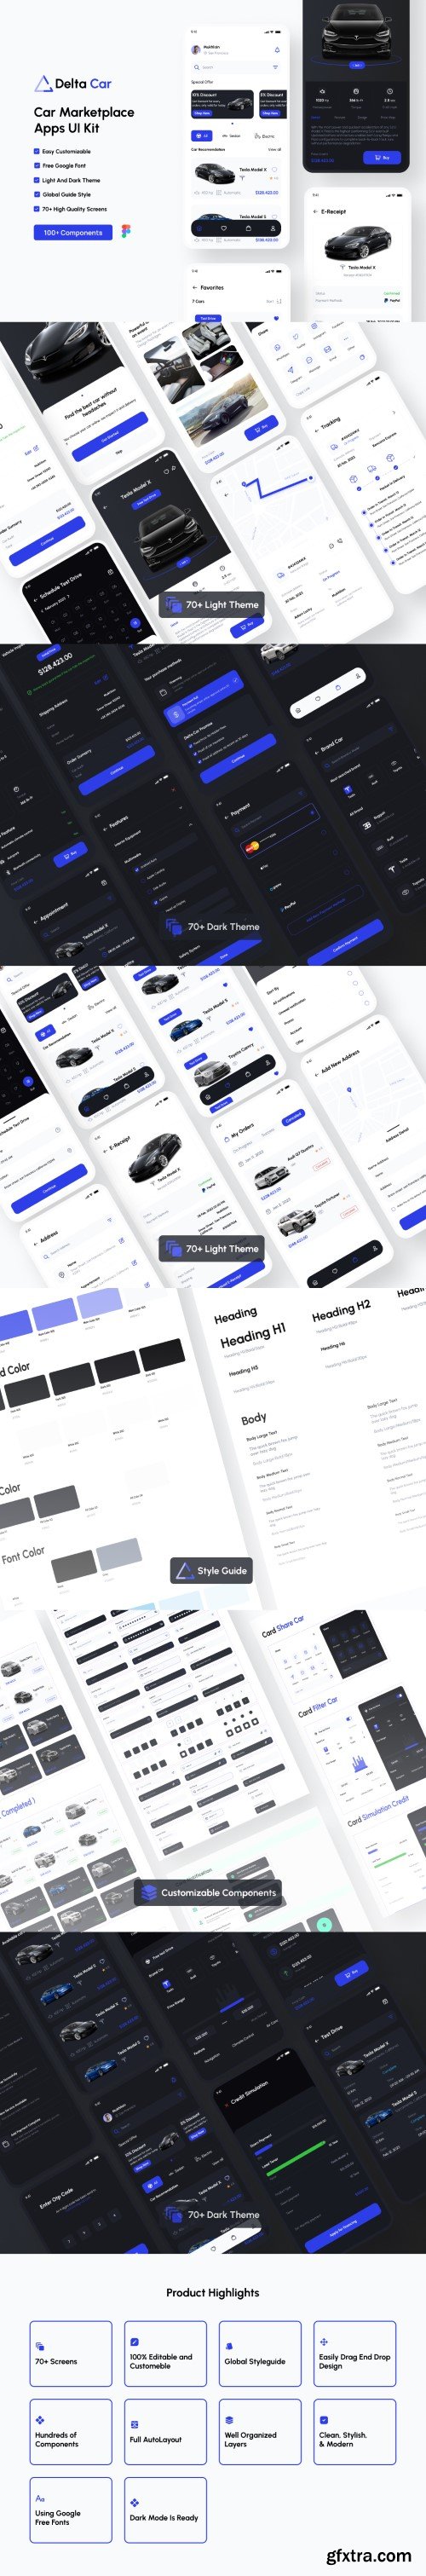 UI8 - Delta Car - Car Marketplace Apps UI Kit